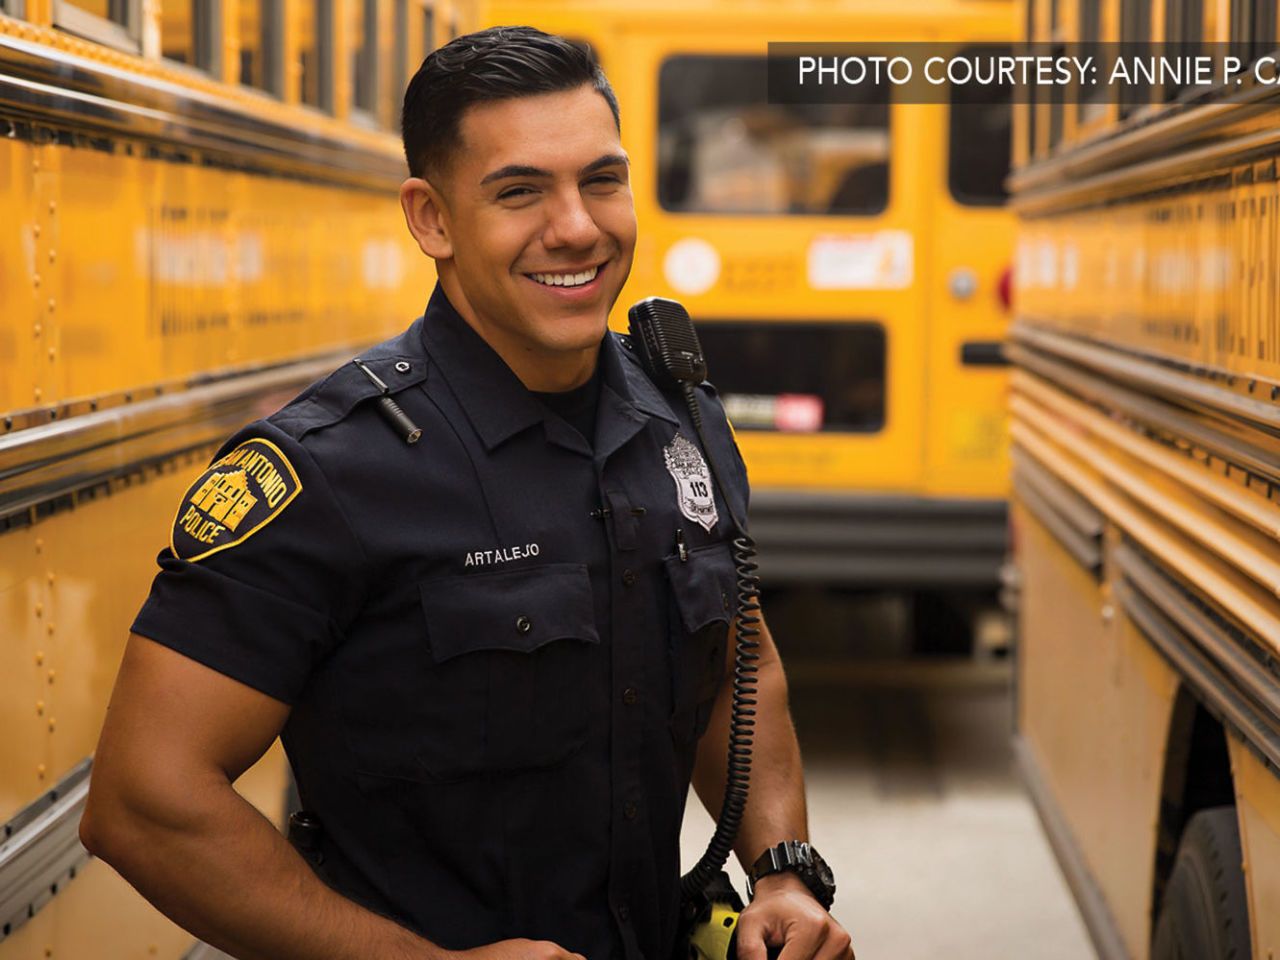 San Antonio Police Departments Hot Cops Calendar Raises Money For Harvey Victims pic photo